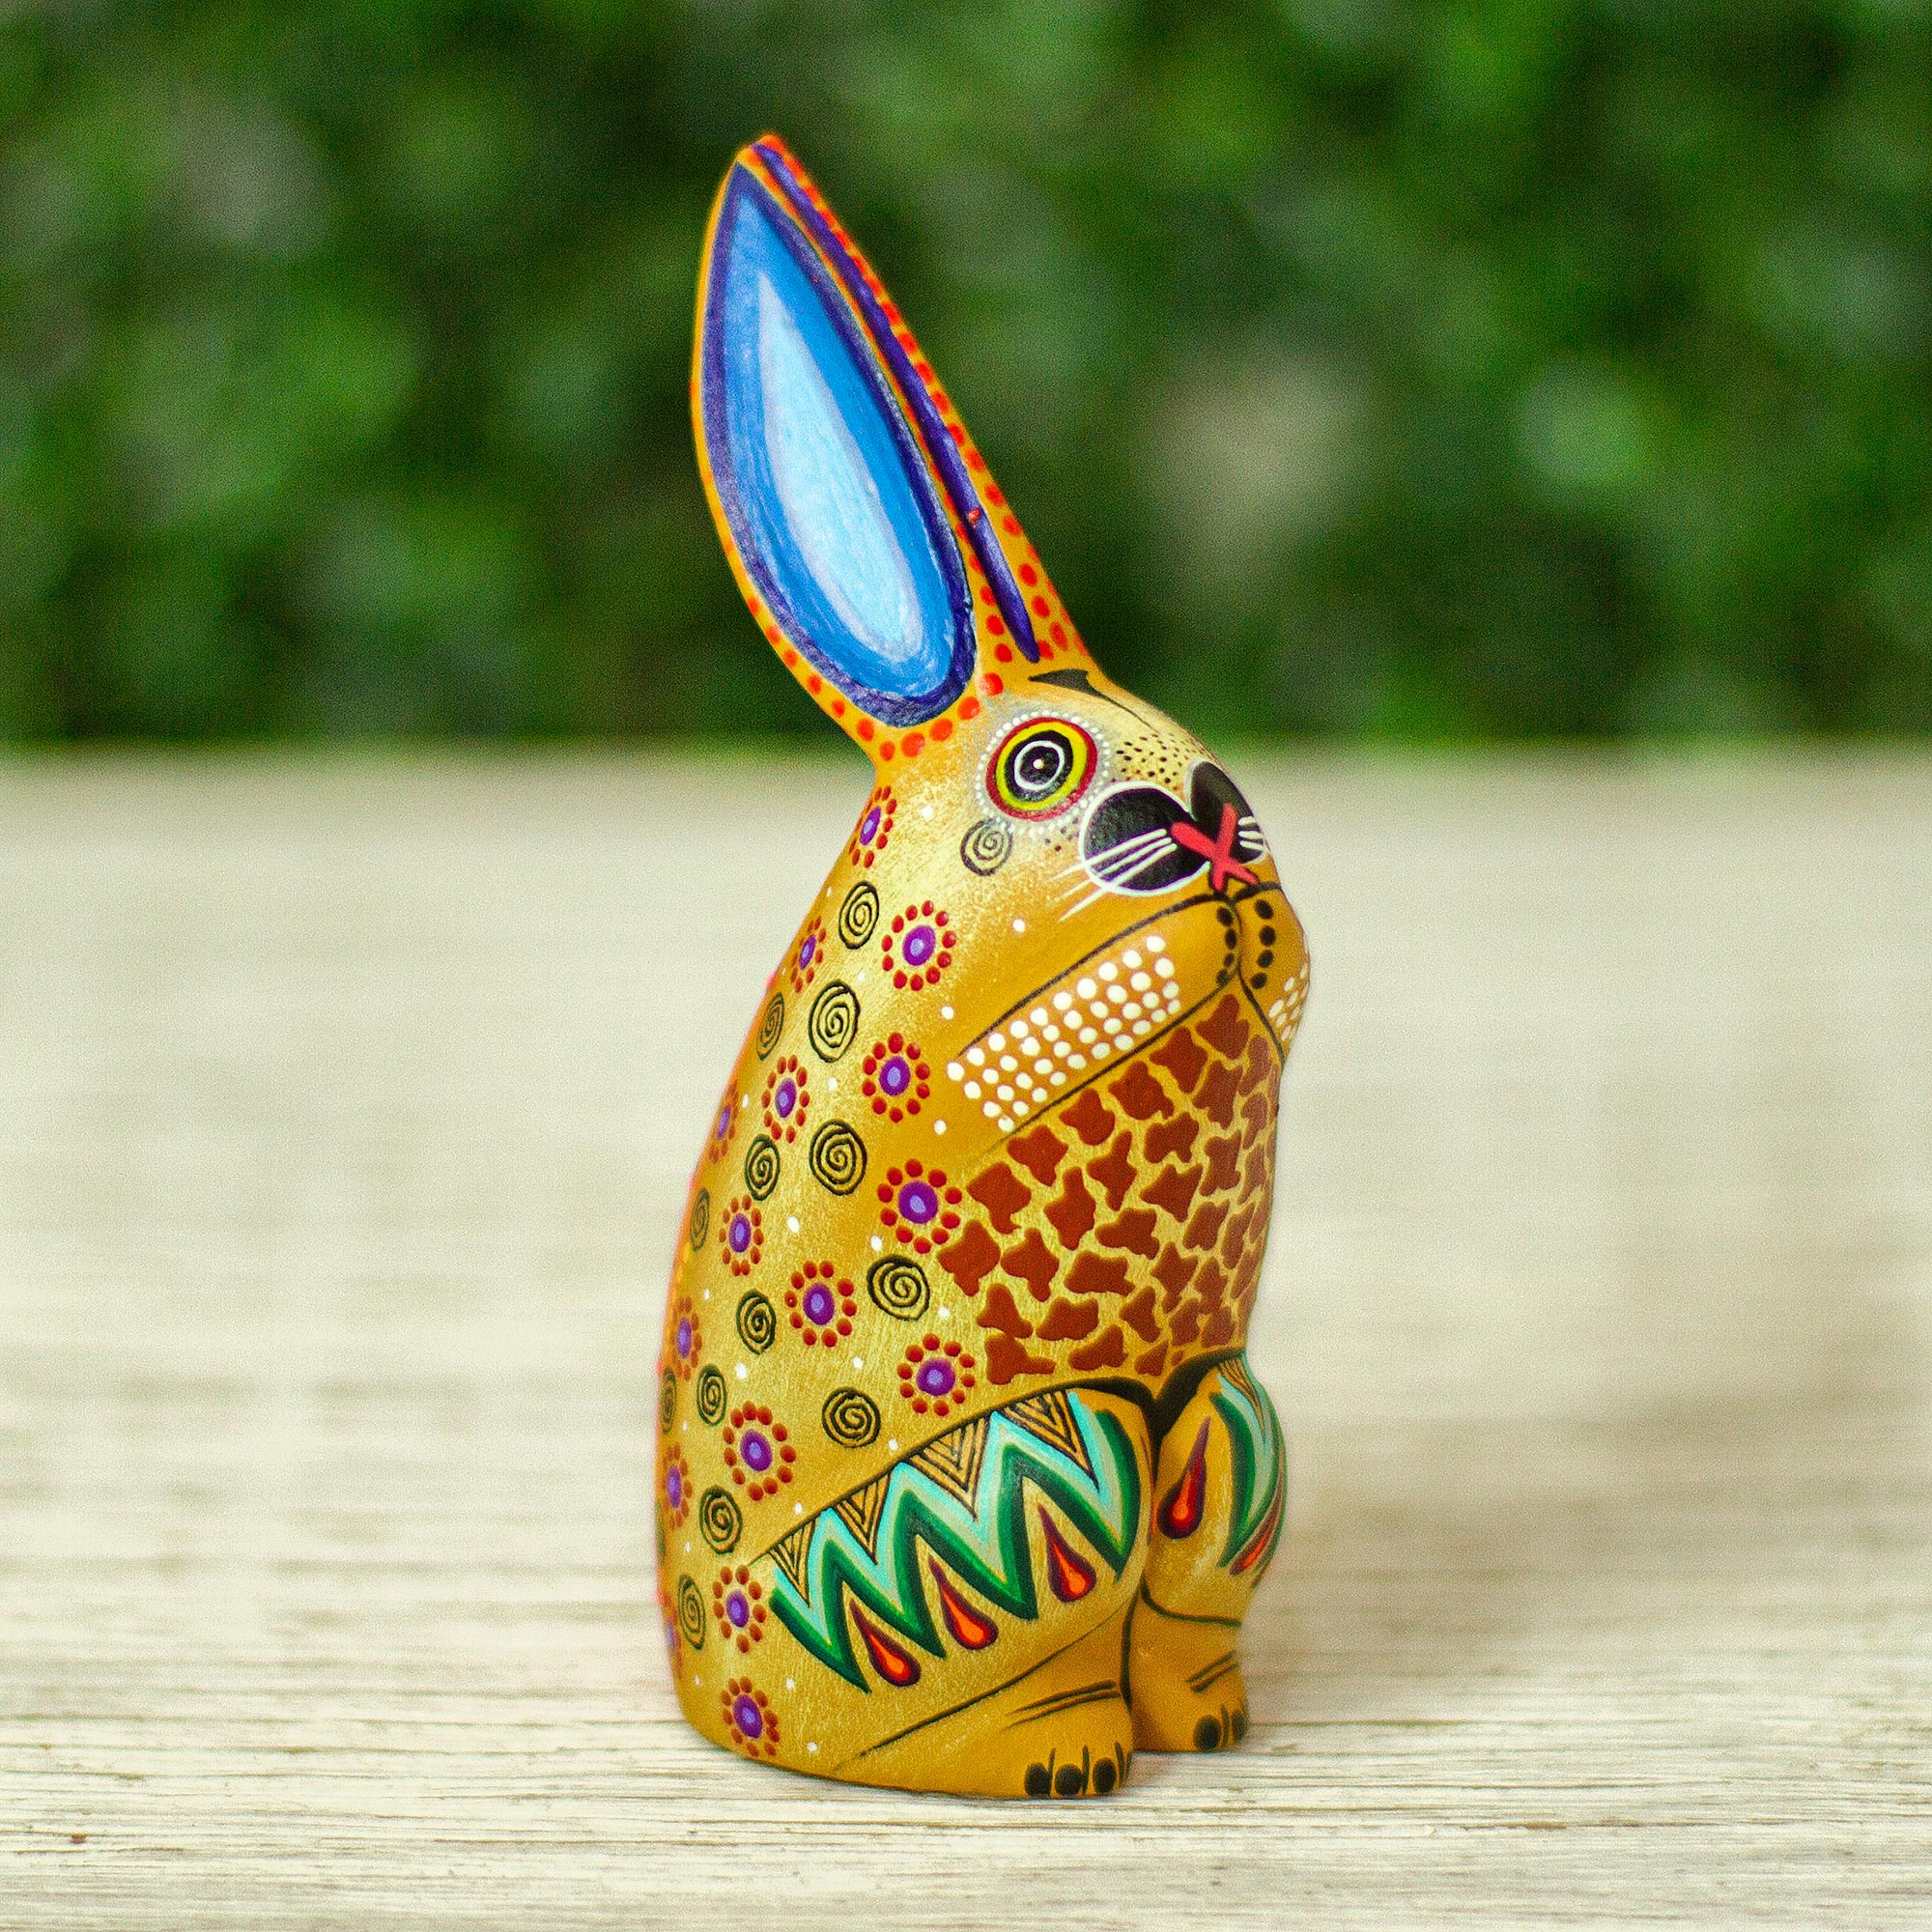 Holz-Alebrije-Kaninchen-Ornamente (5er-Set) aus Mexiko – süße Kaninchen